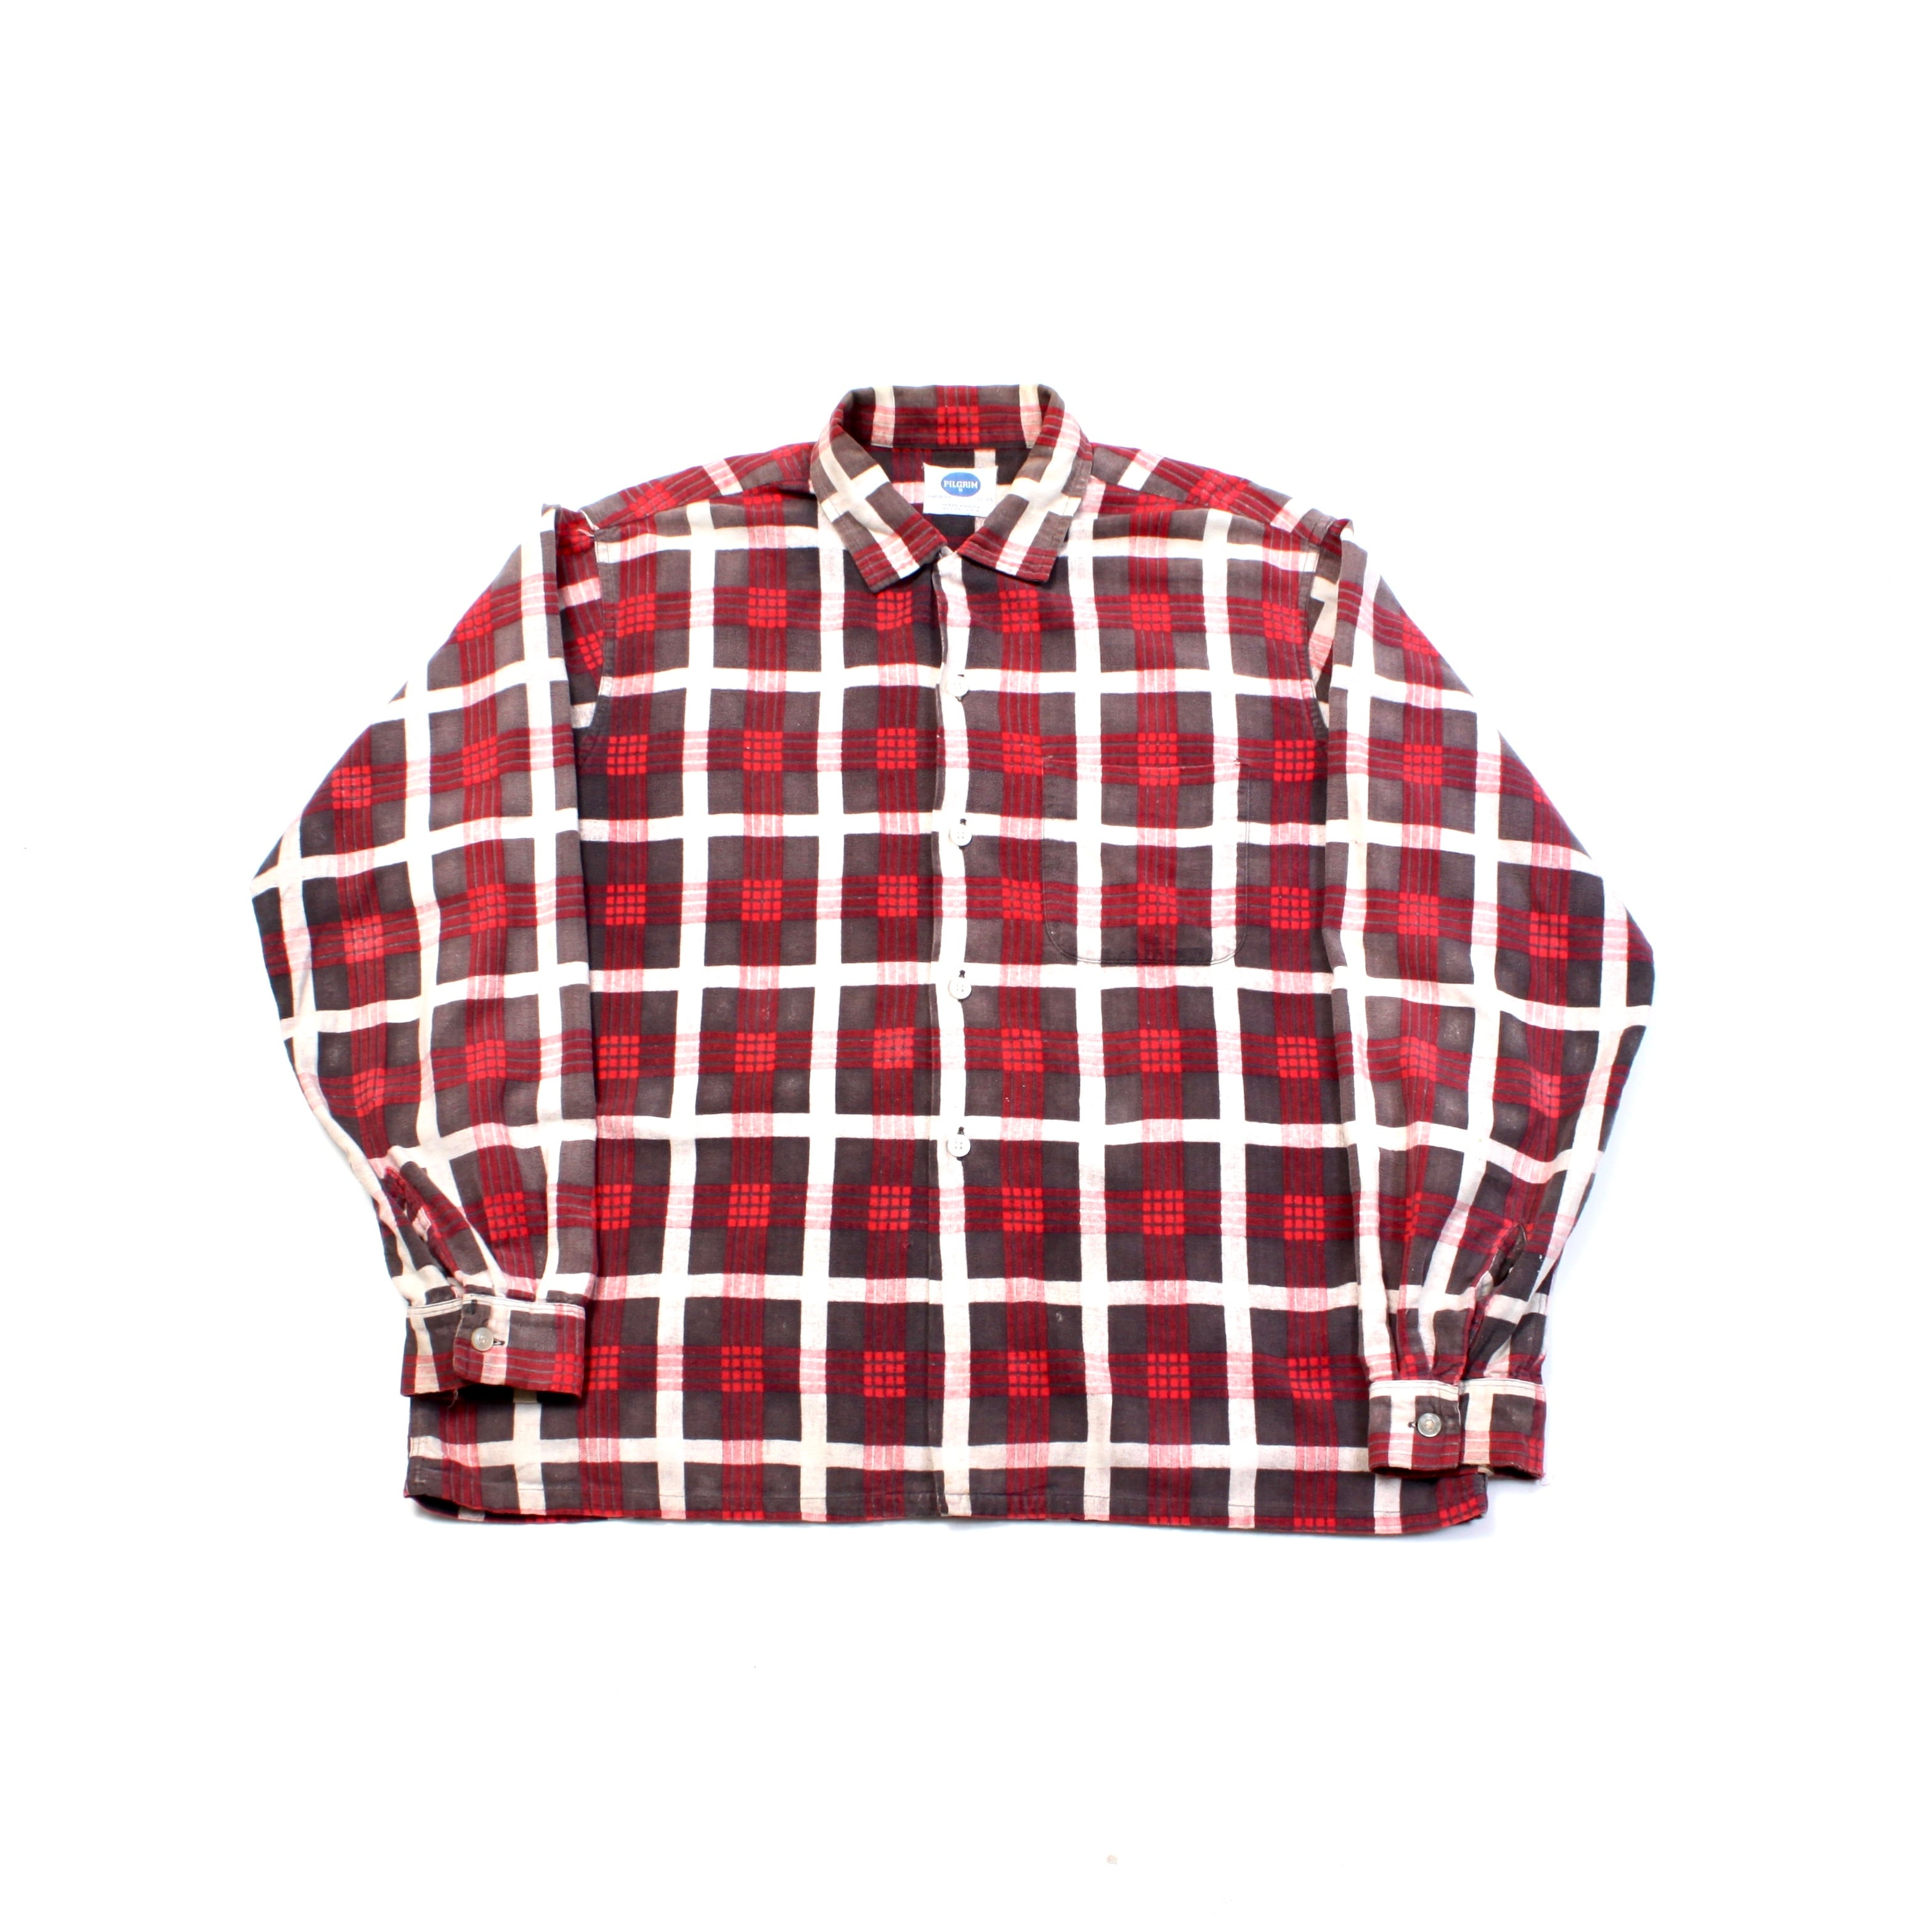 0353. ~1960's pilgrim printed flannel shirt レッド ブラック 